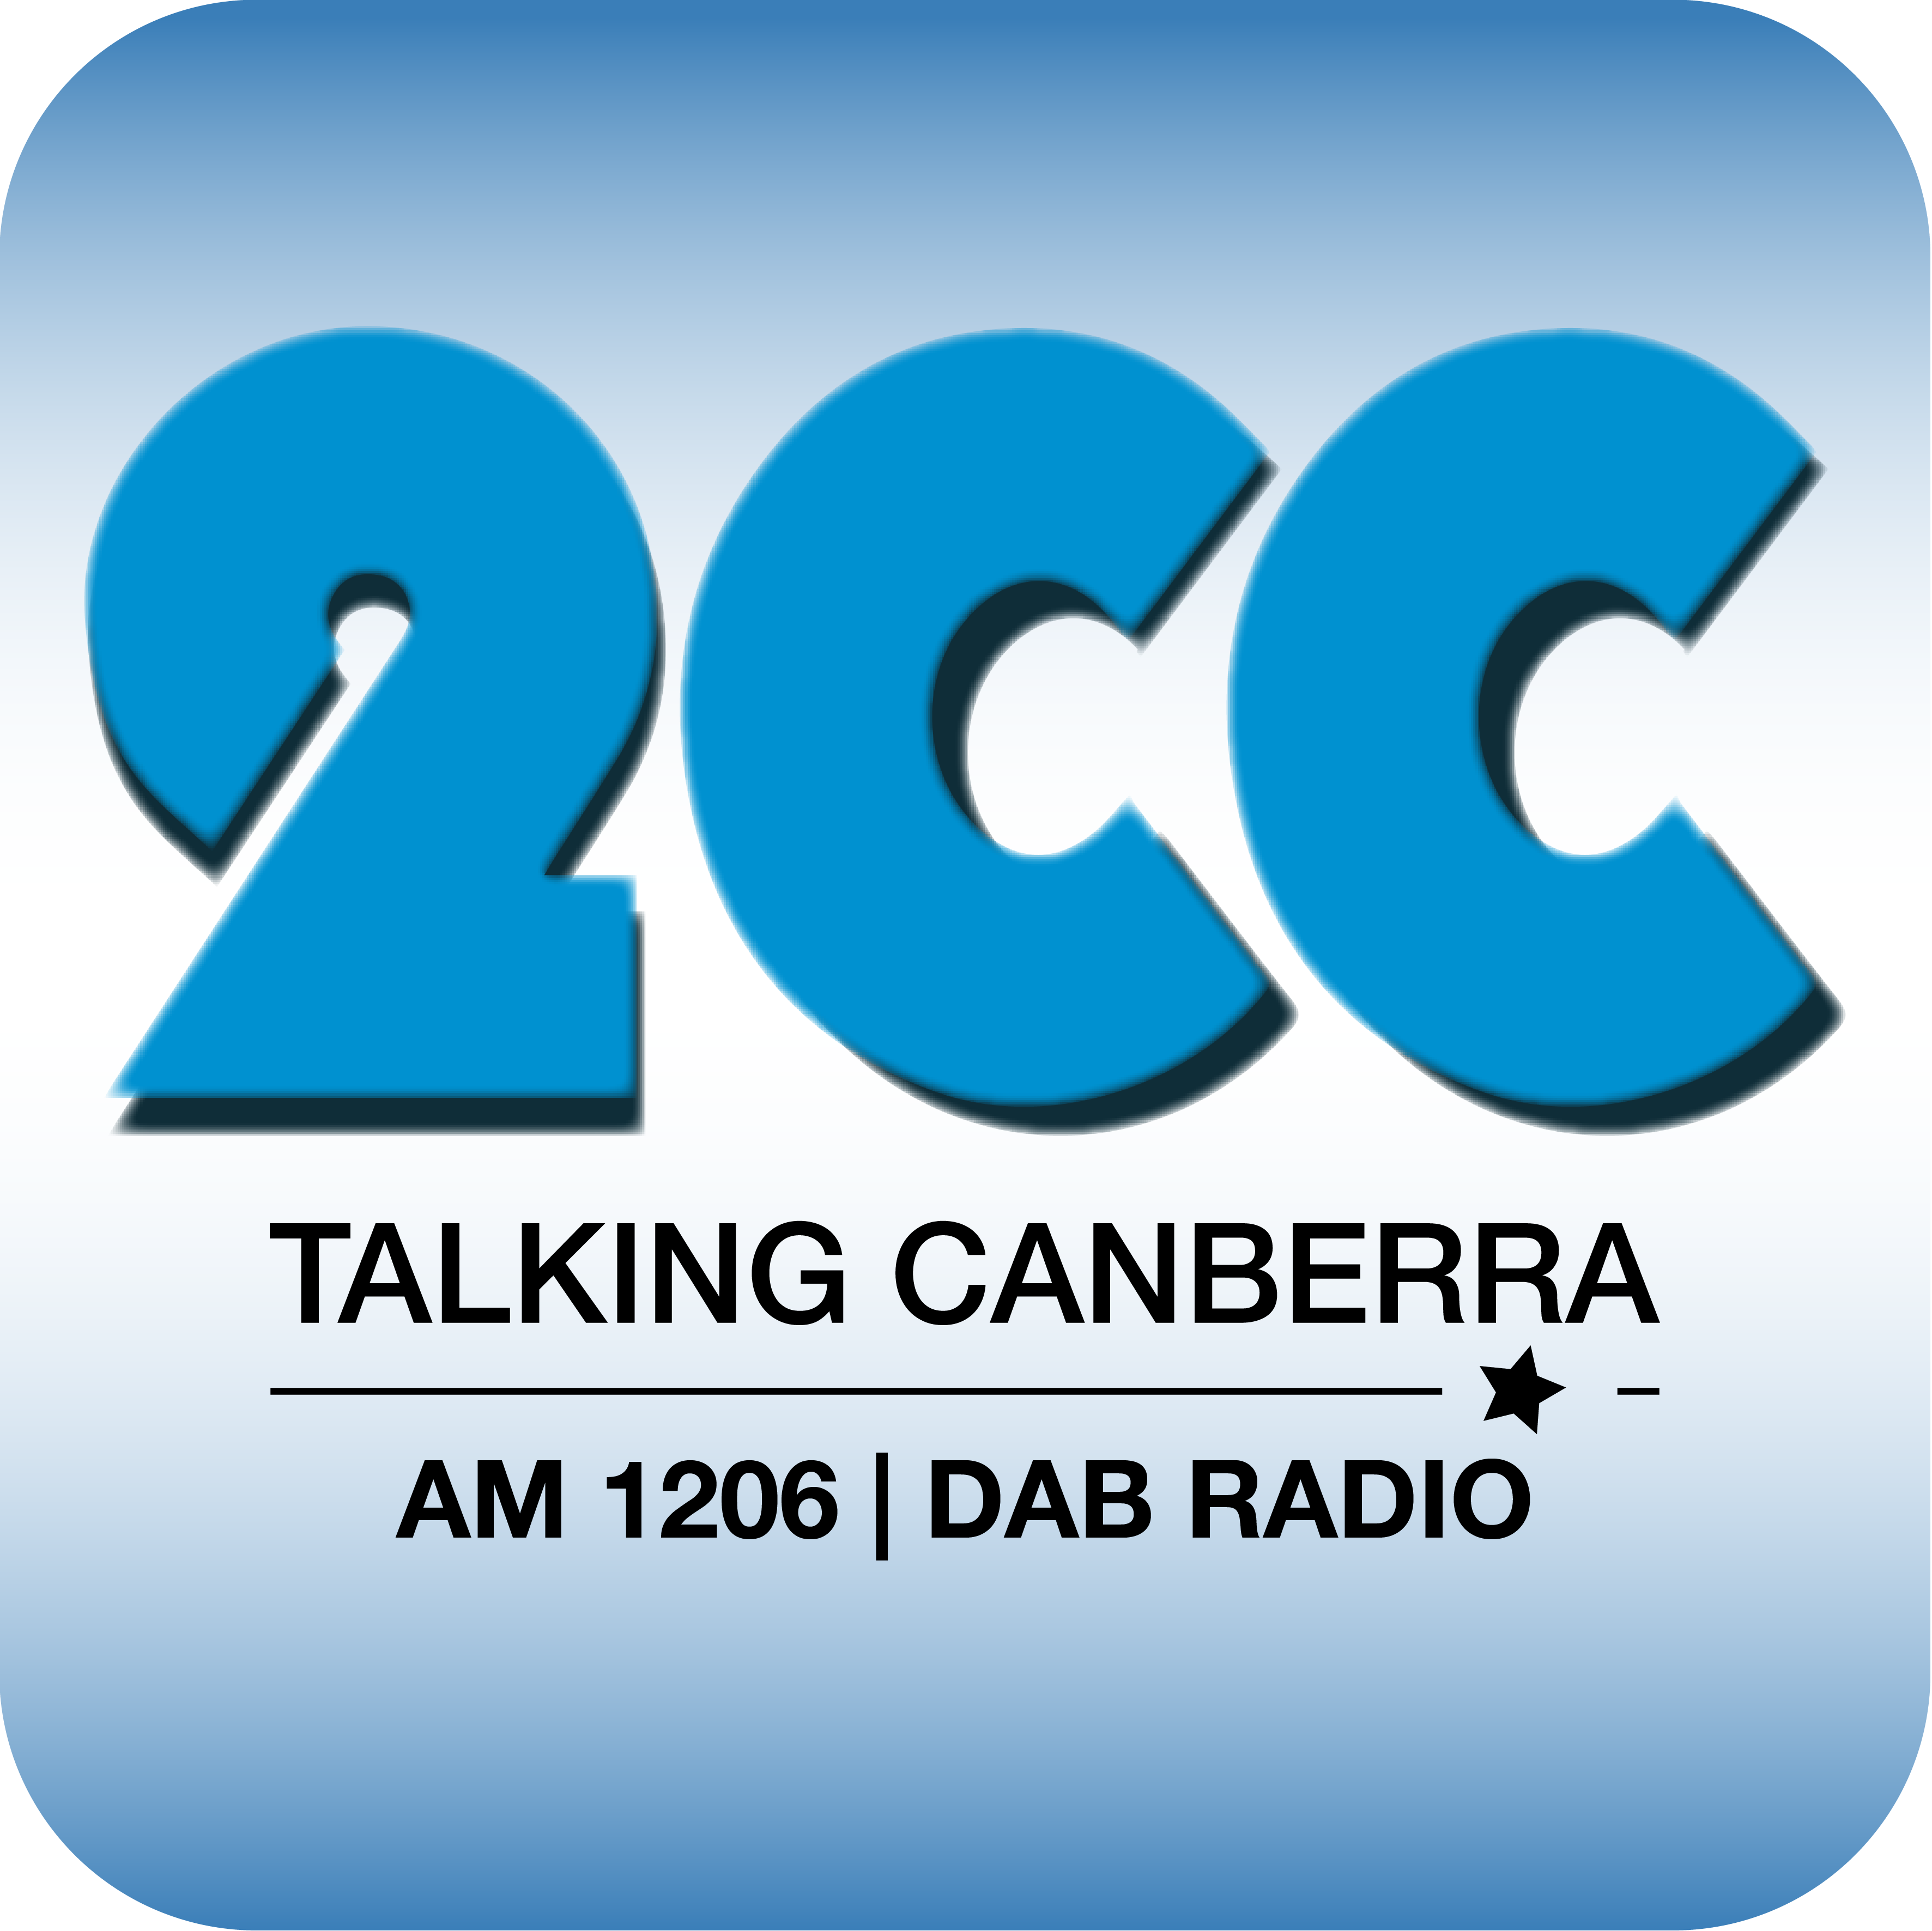 Talking Canberra 2CC